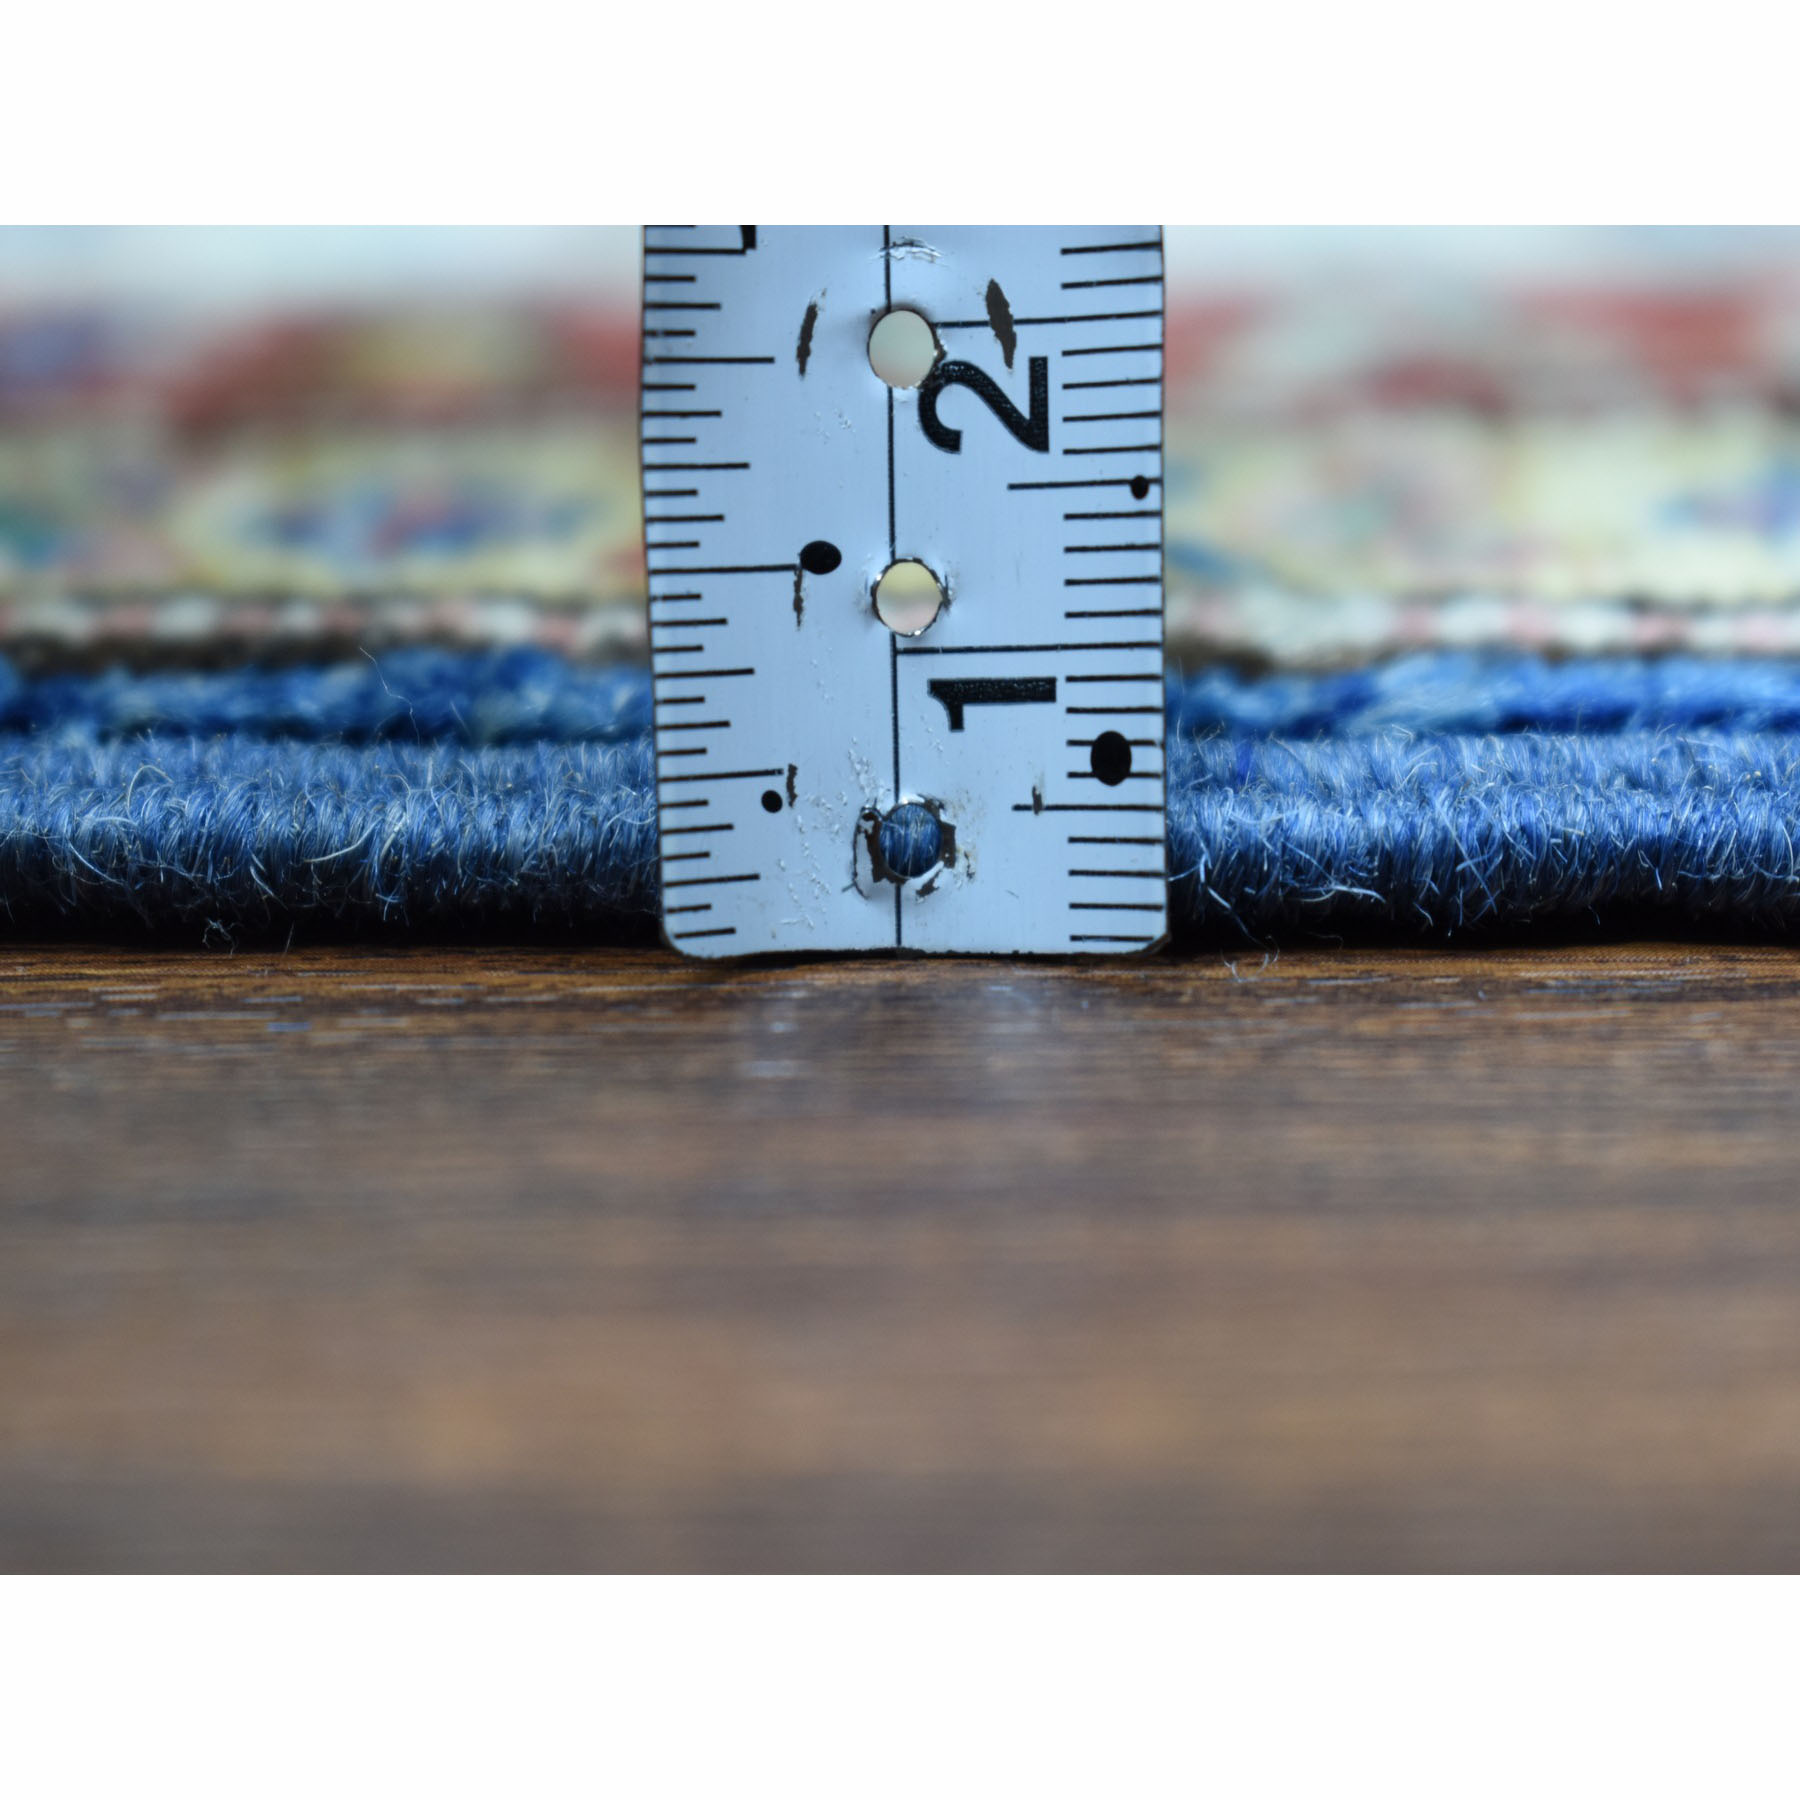 2-8 x4- Blue Super Kazak Pure Wool Geometric Design Hand-Knotted Oriental Rug 